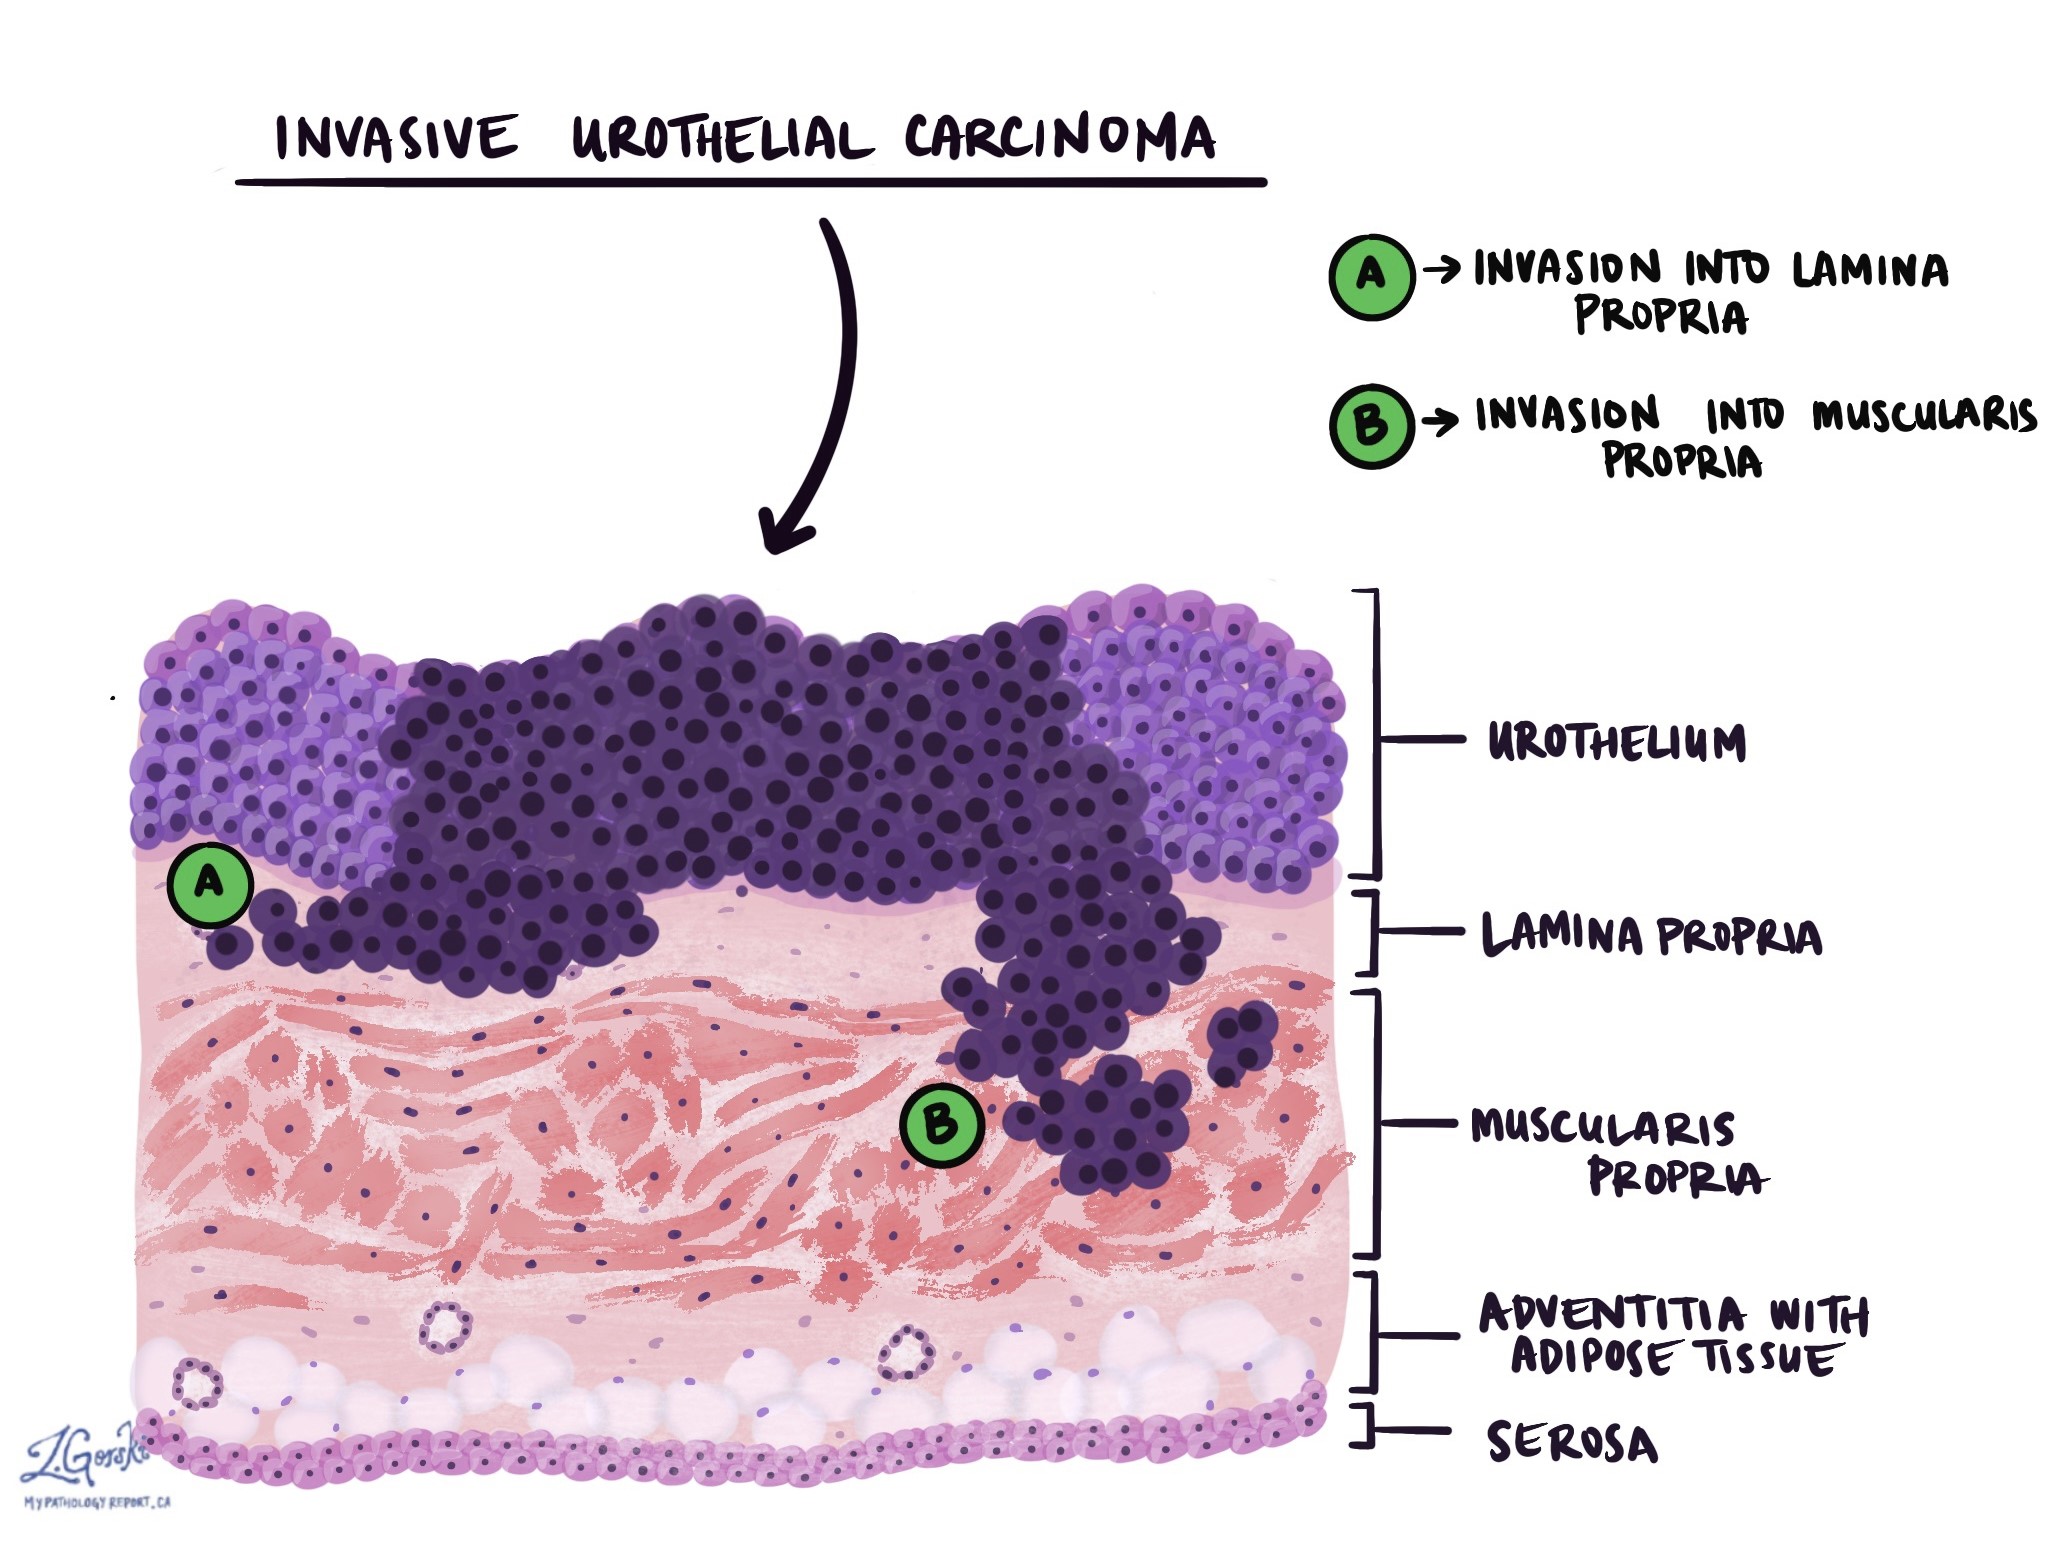 Invasivt urotelialt karcinom